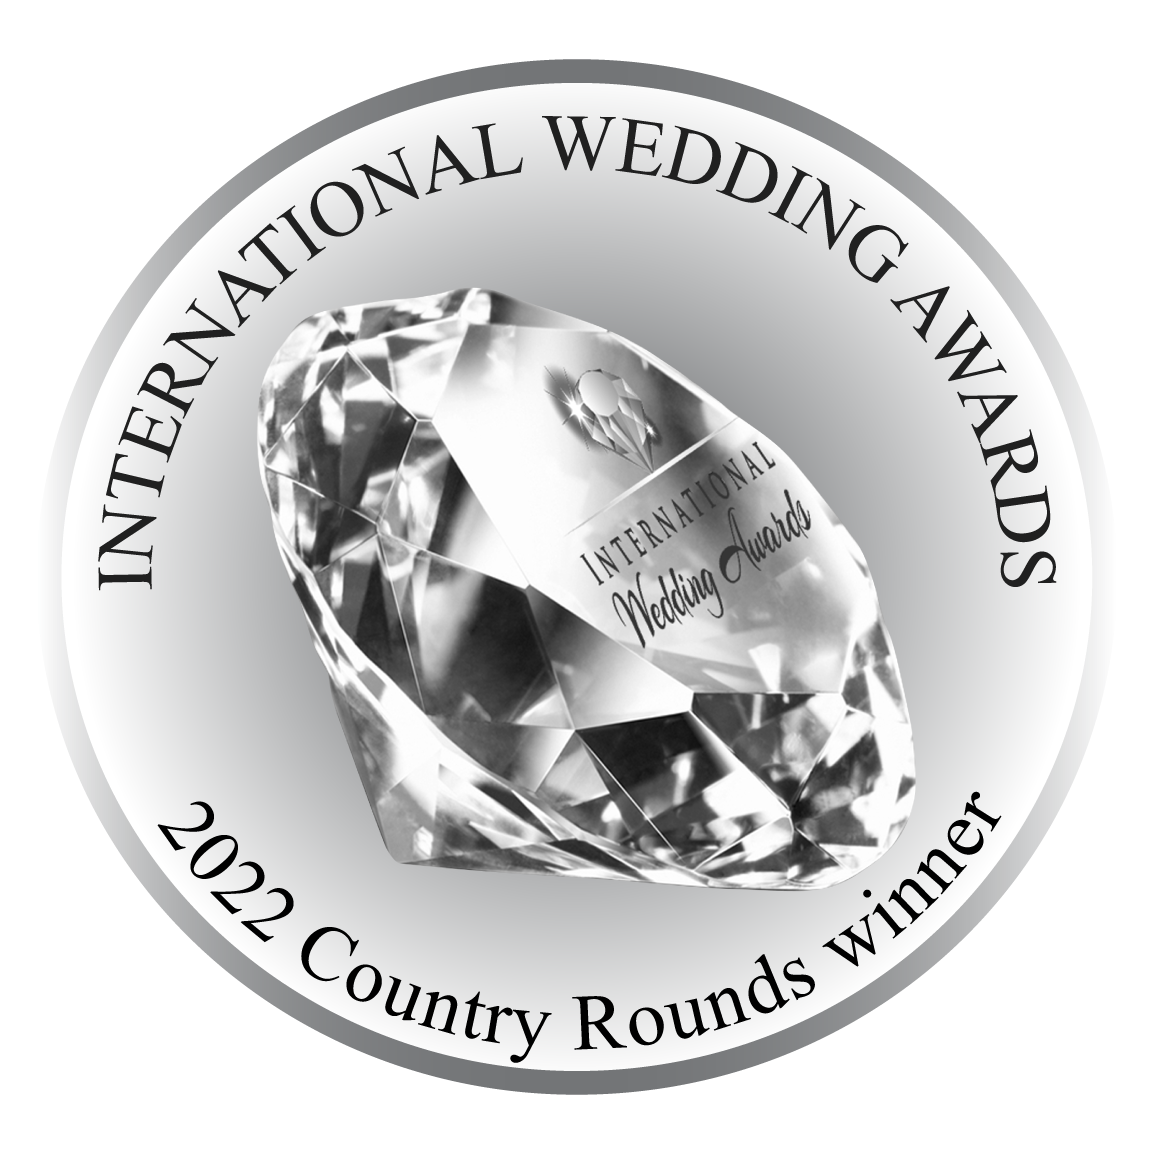 International Wedding Awards